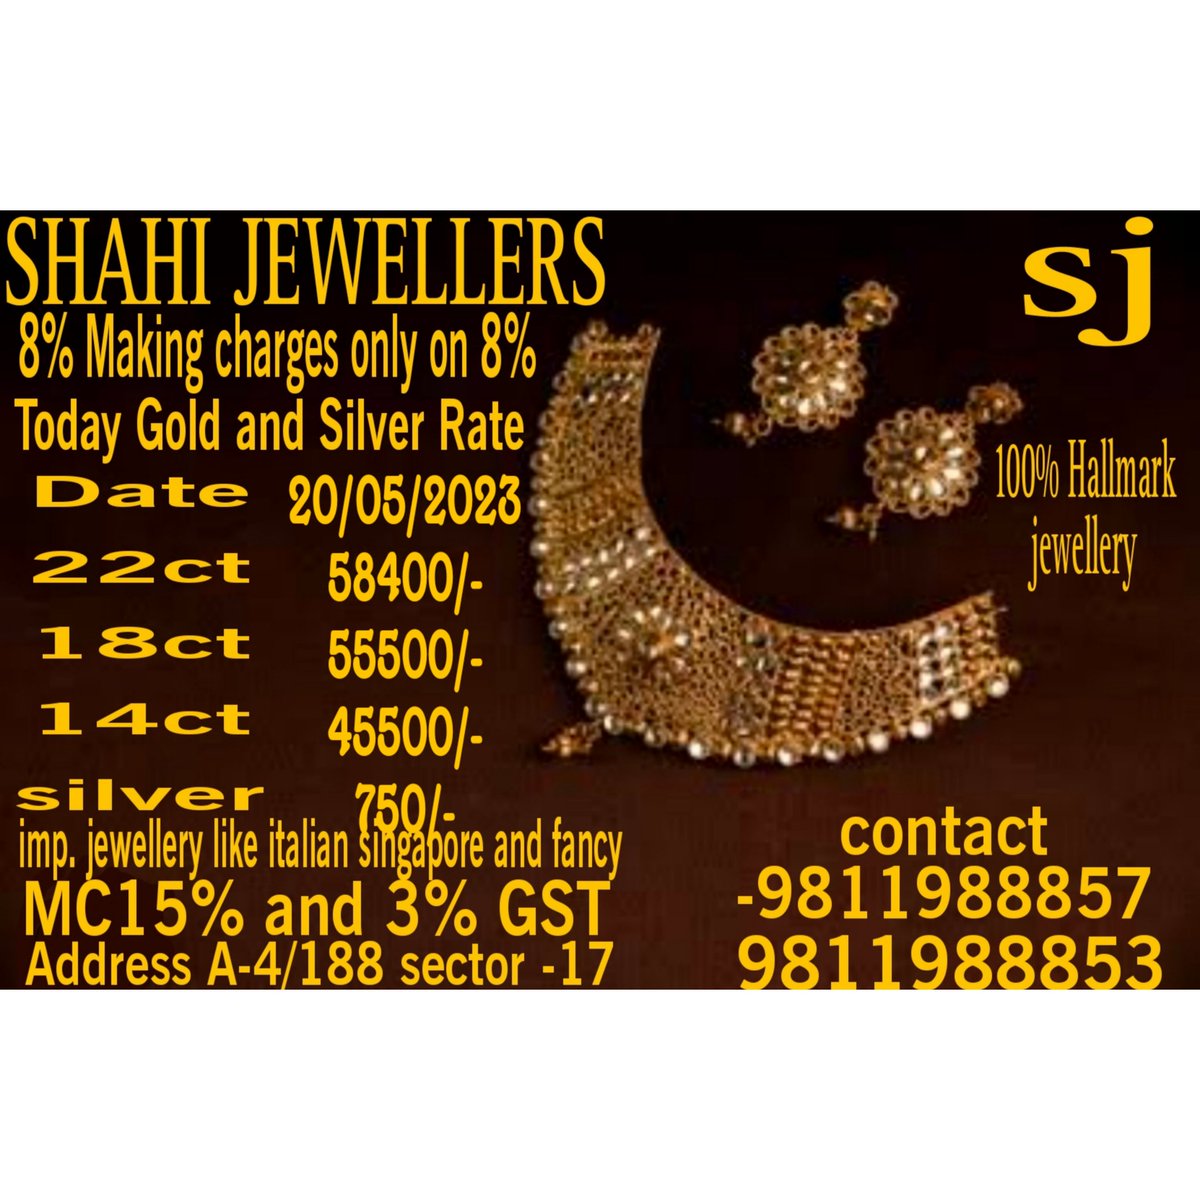 Today gold and silver rate
.
.
.
@shahijewellersrohini 
.
.
.
#jewellery #goldnecklace #goldbali #goldirng #goldearrings #bali #pendant #fancyjewelry #shahijewellersrohini #goldentemple #goldchains #goldjhumk